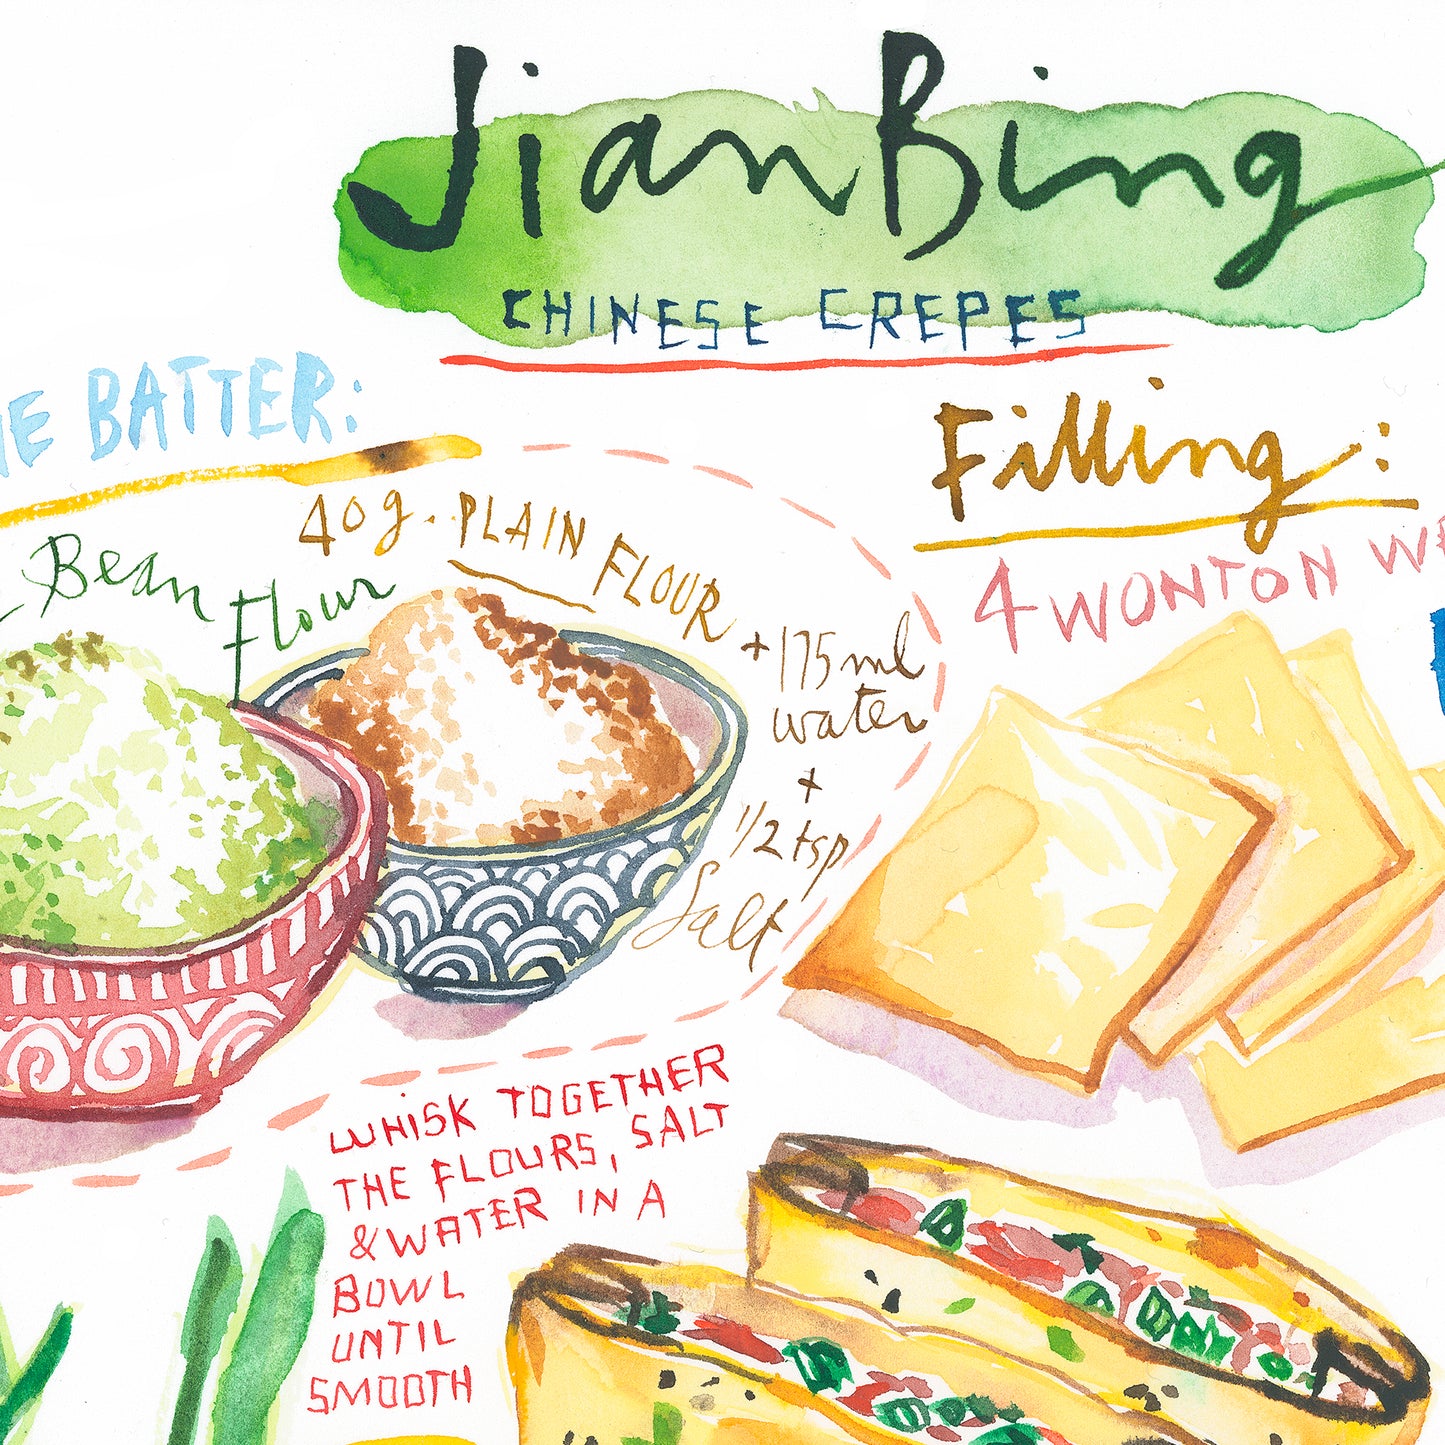 Chinese Crepe recipe - Jianbing